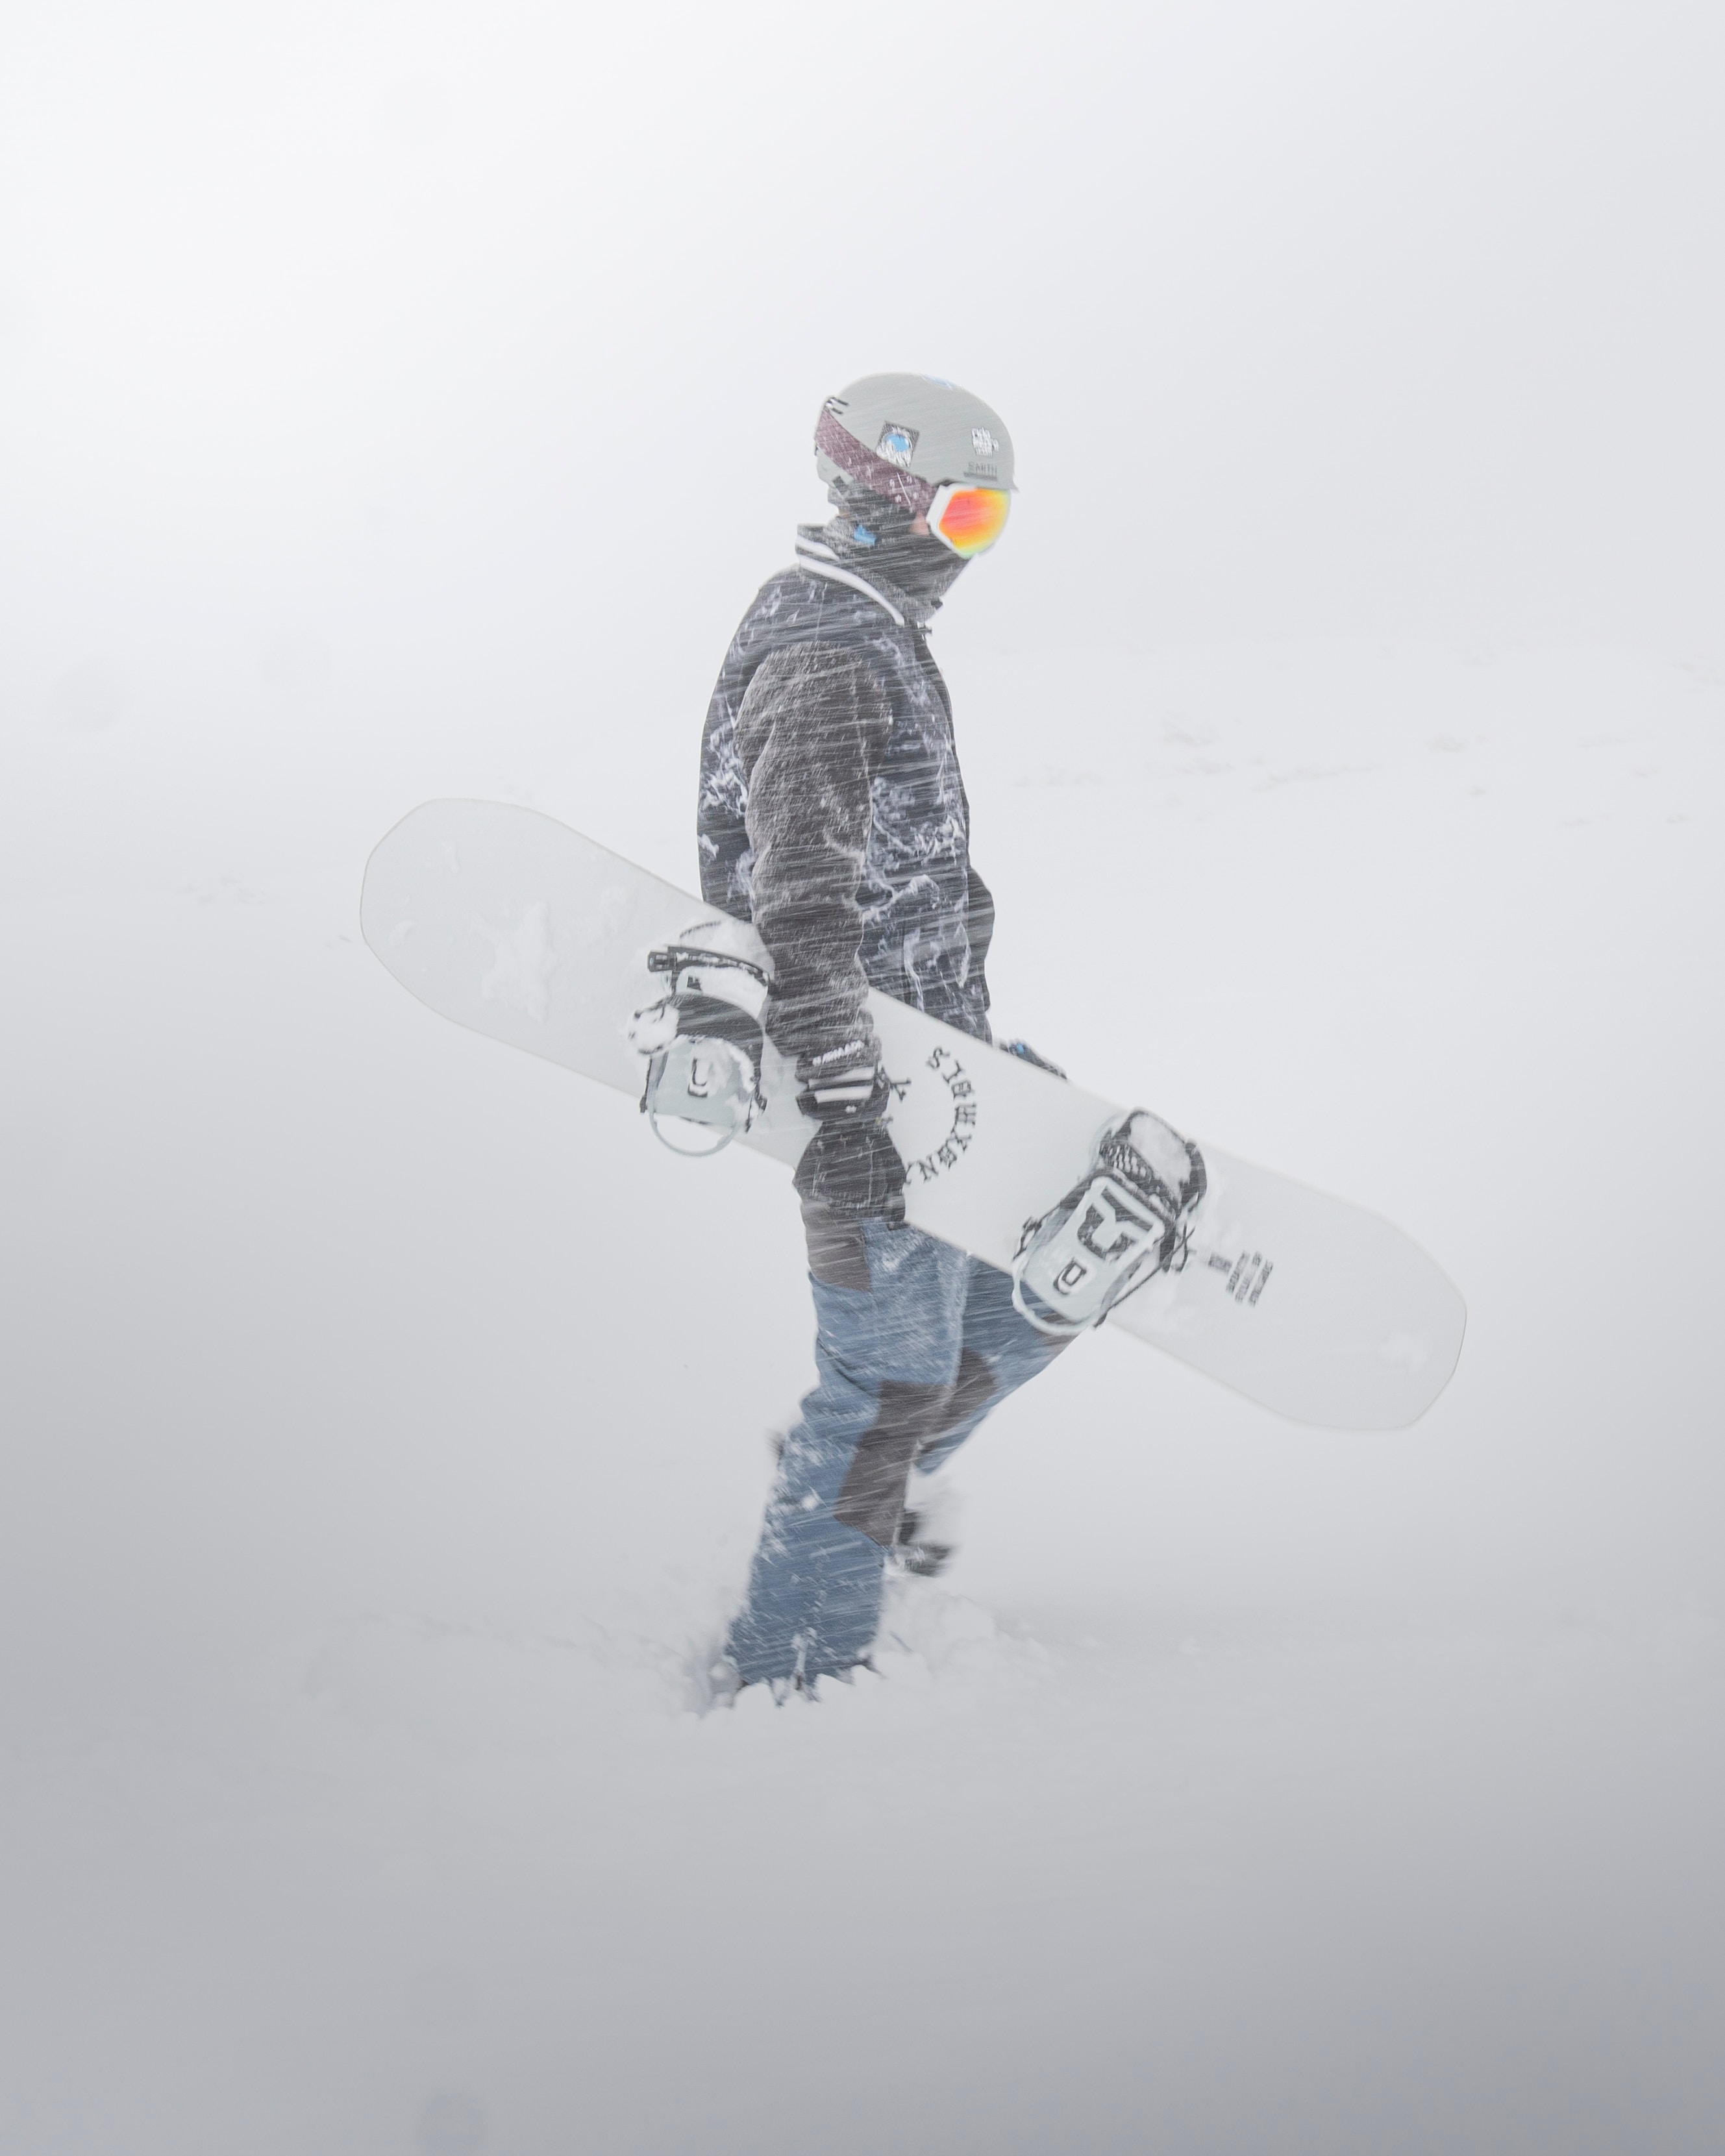 snowboard, snow, sports, human, person, snowstorm, snowboarder